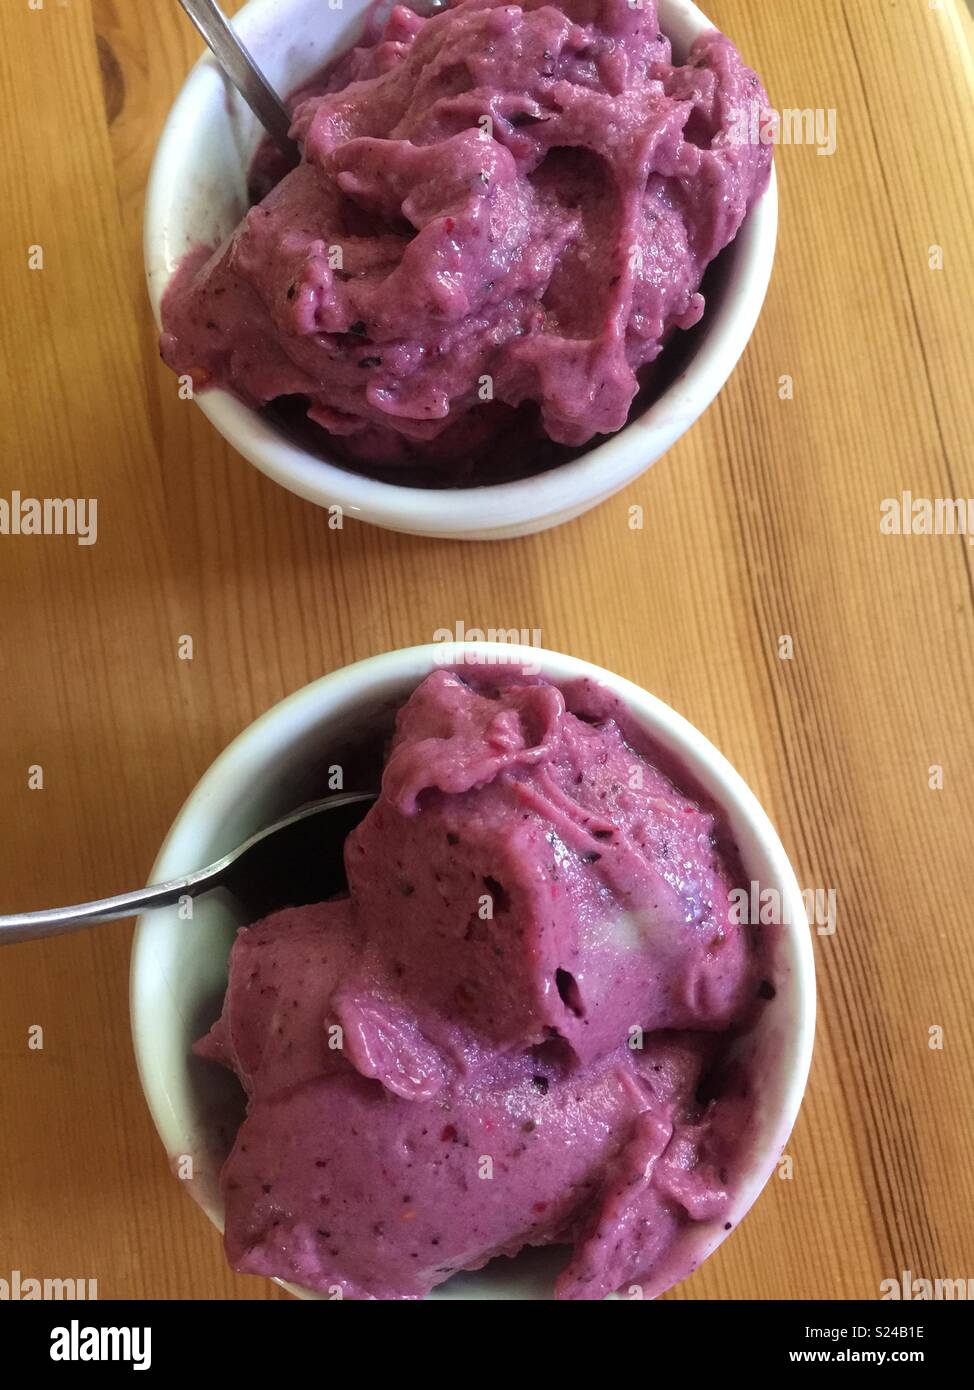 Banana ice cream or ‘nice cream’ with mixed berries served in white ramekins. Stock Photo